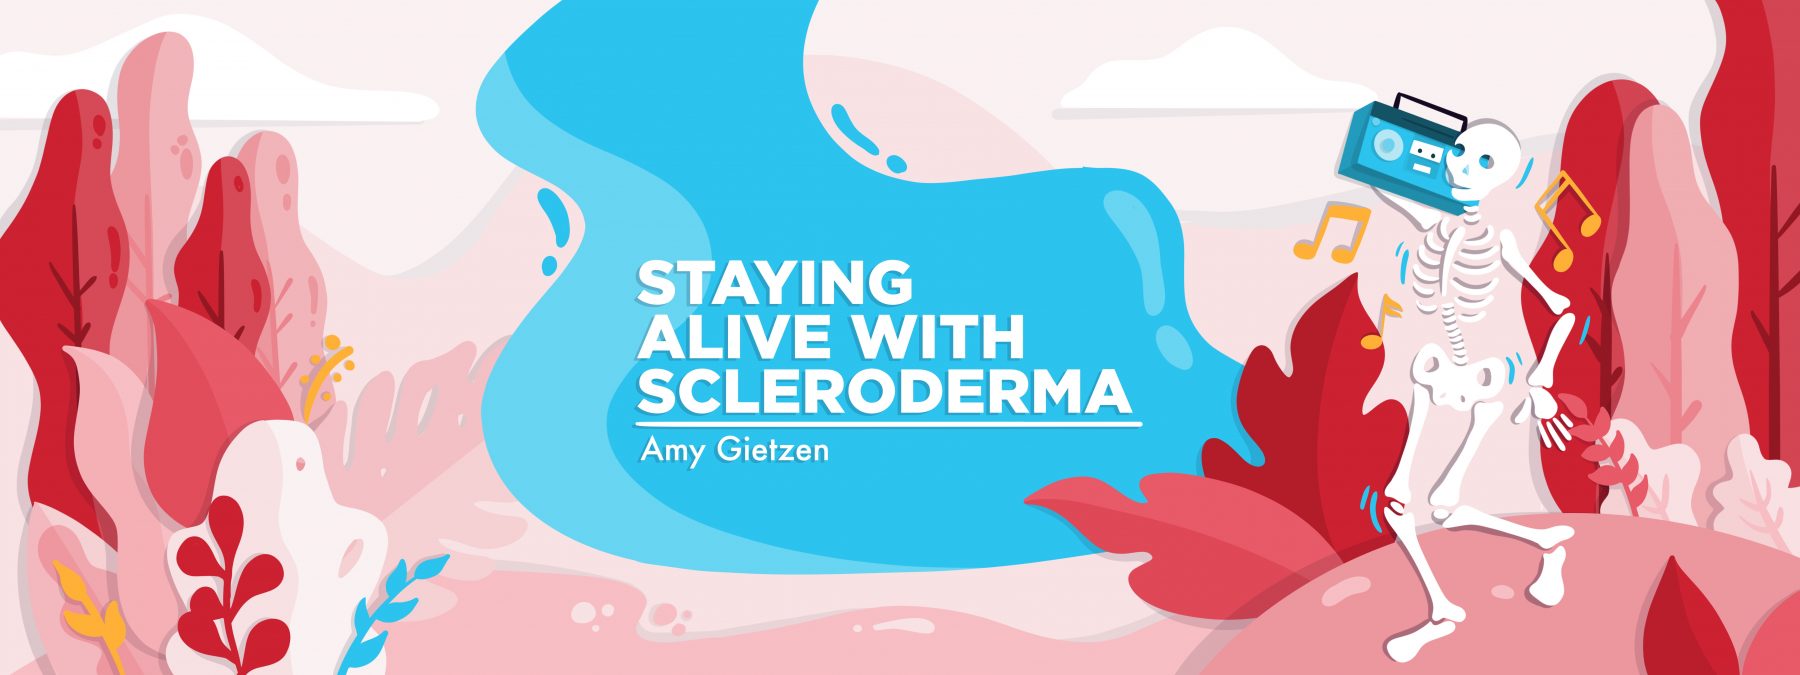 Scleroderma News | family | banner image for 